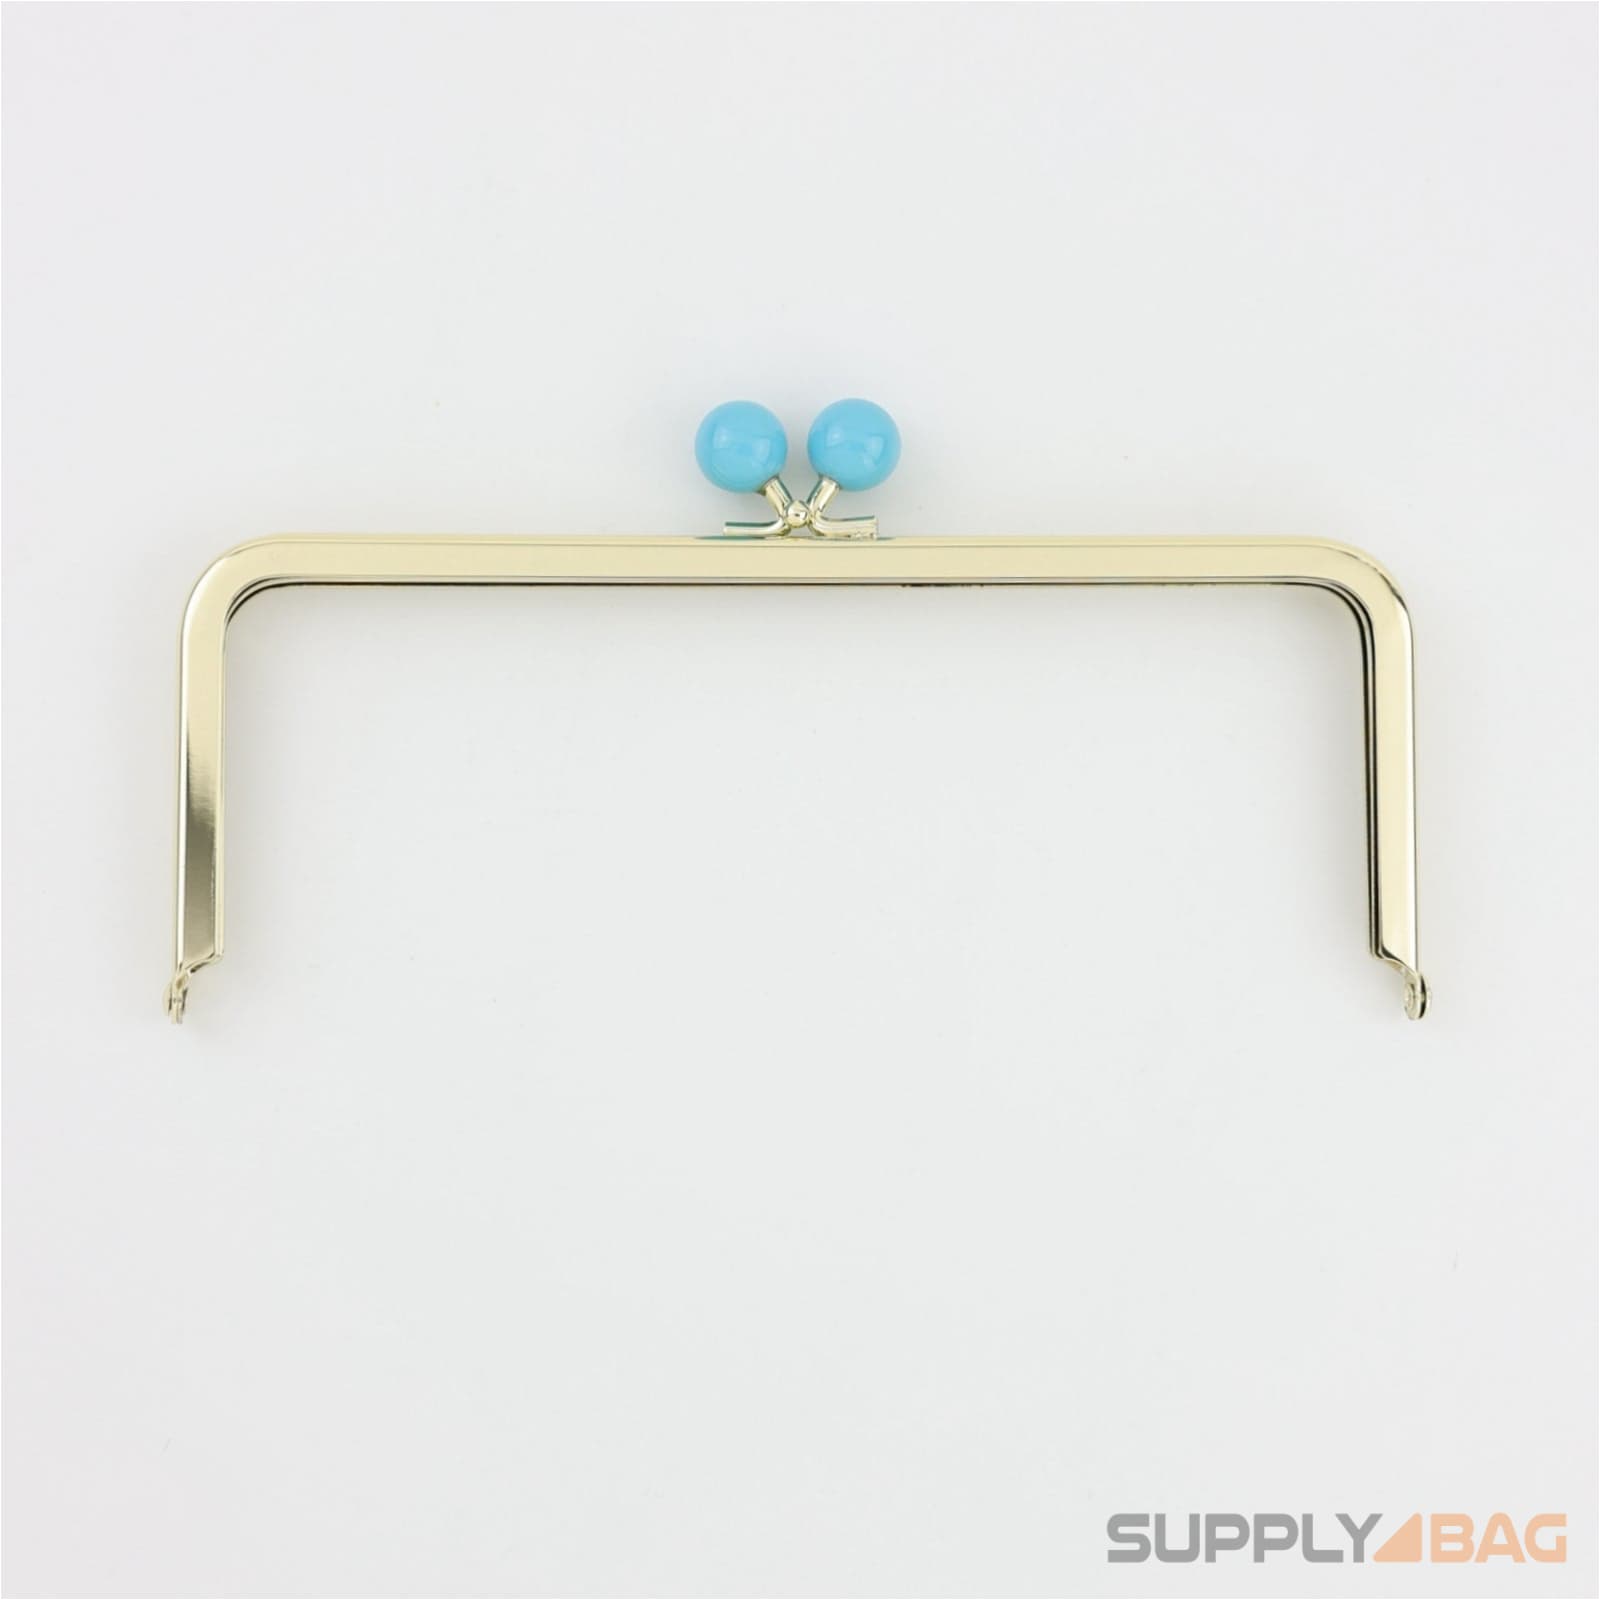 7 1/4 x 2 3/4 inch - Blue Acrylic Clasp Light Gold Metal Purse Frame